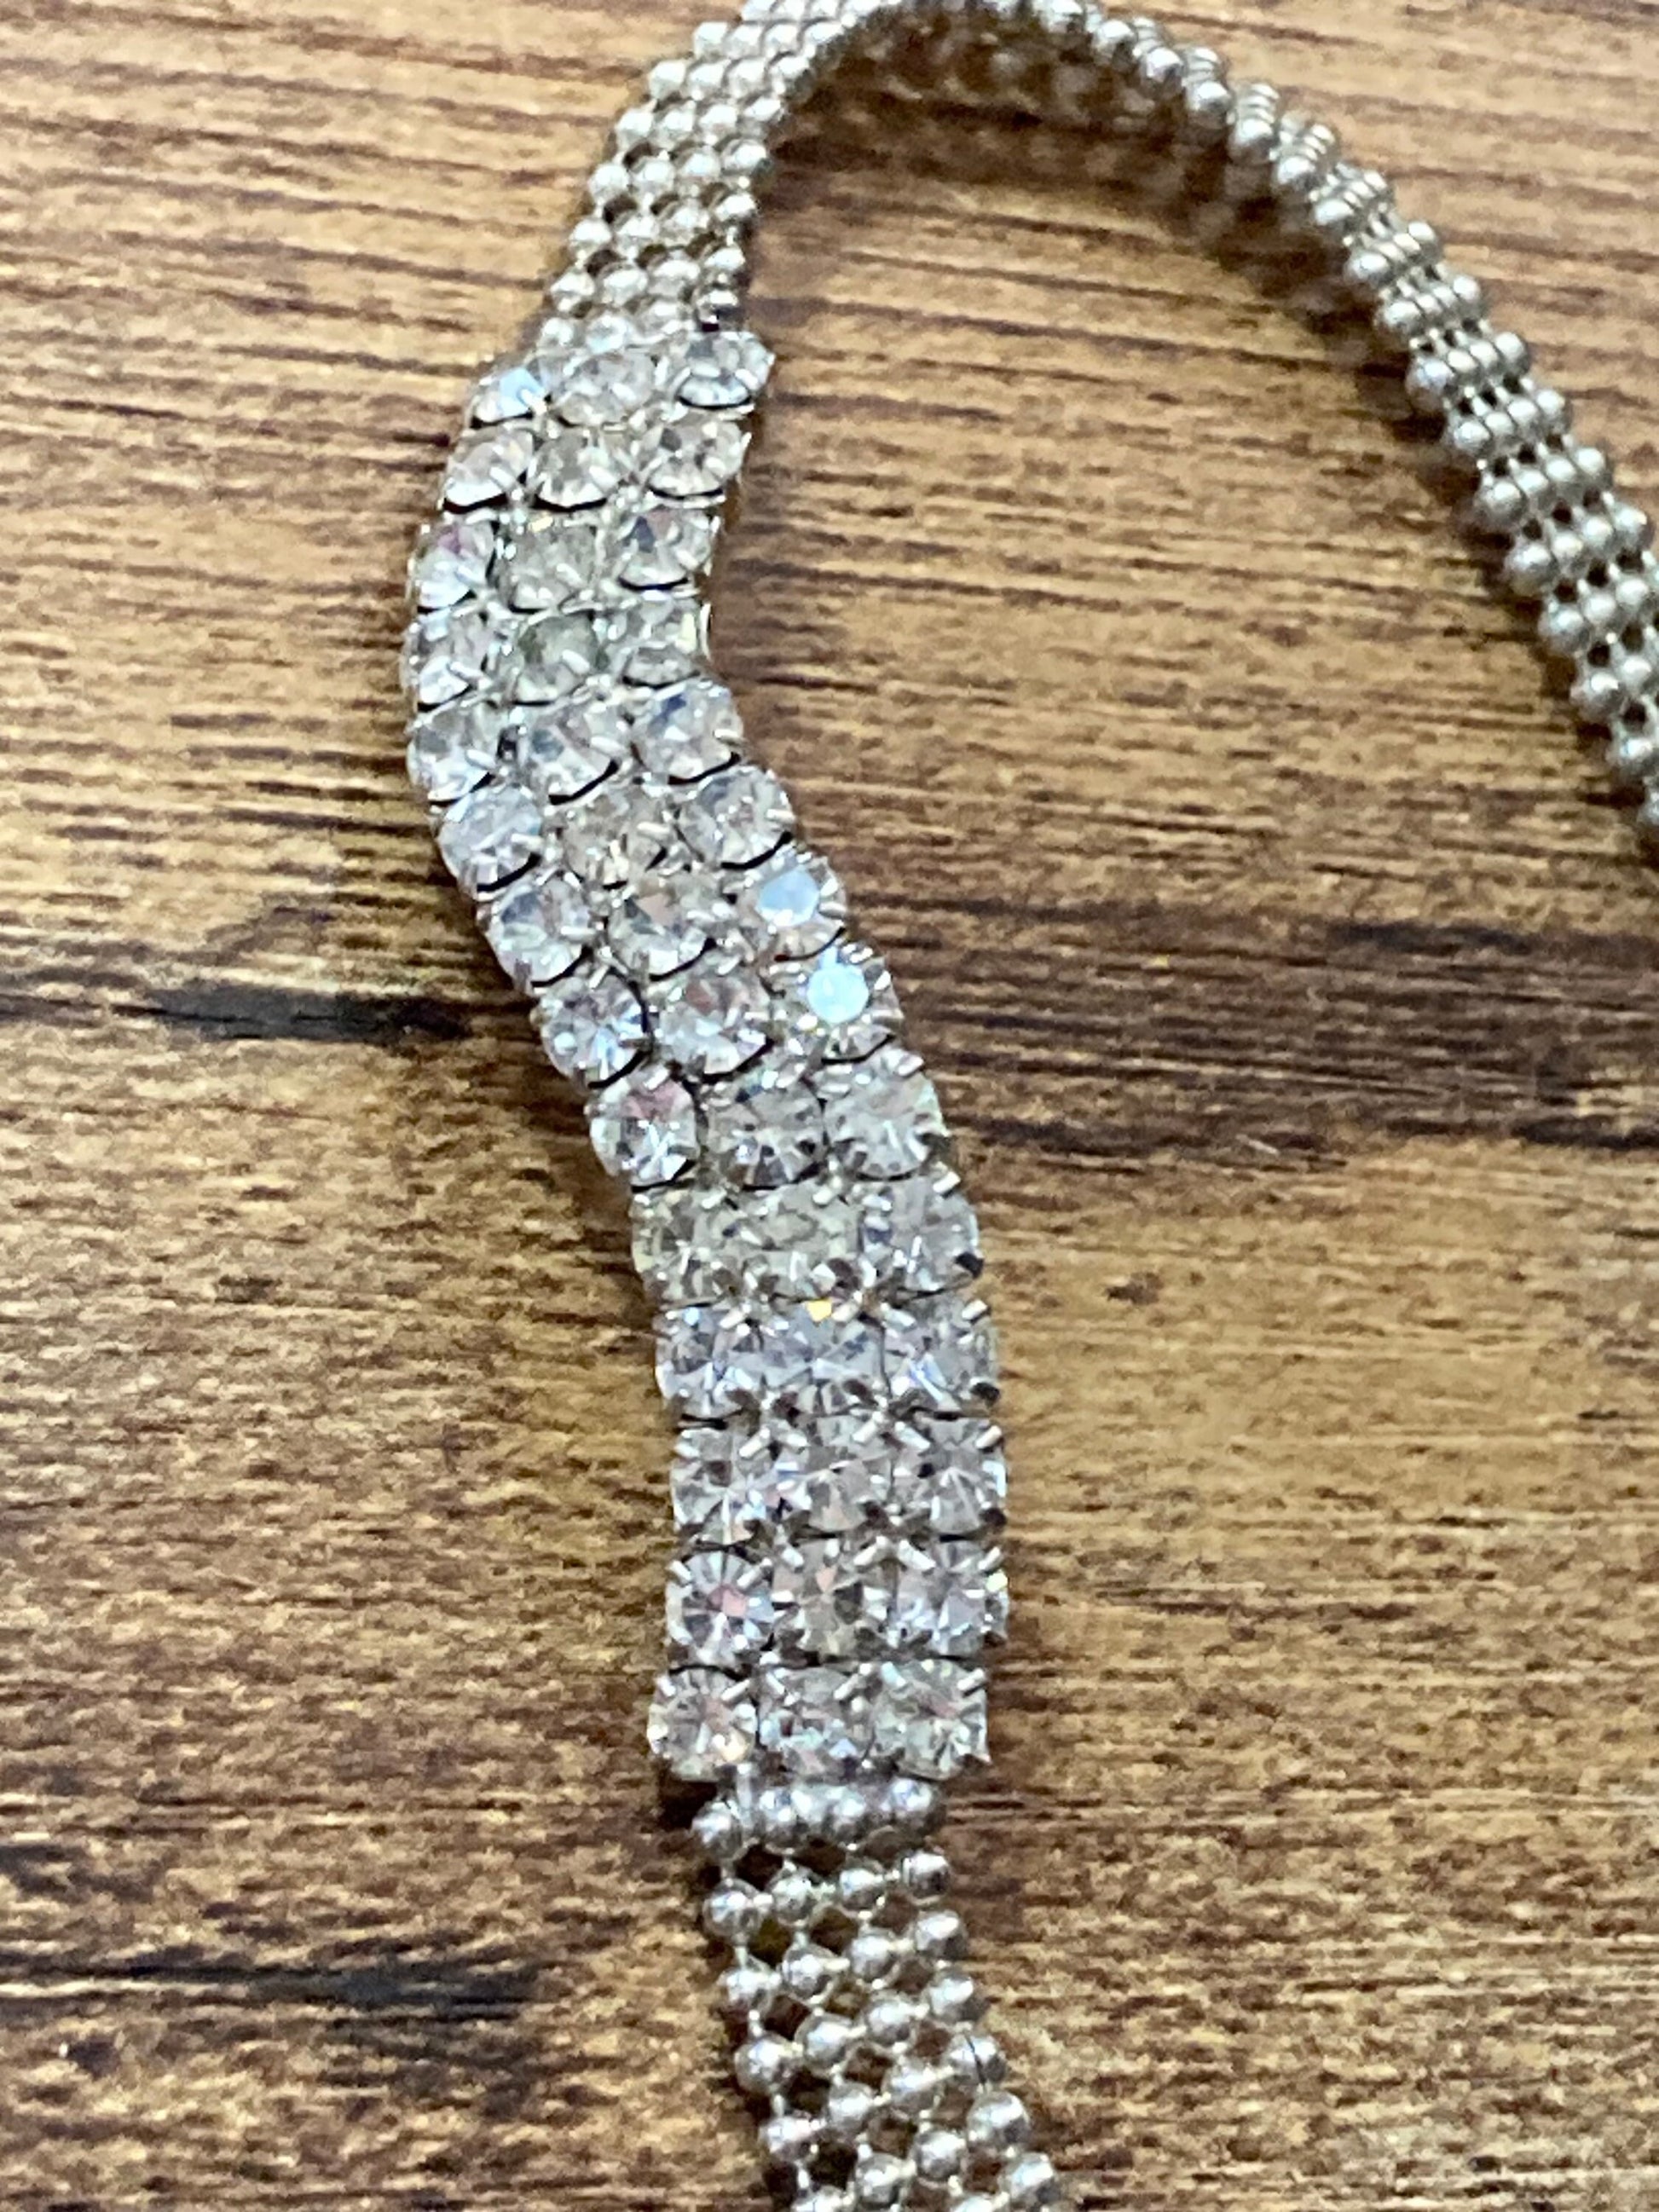 clear Rhinestone diamanté Bracelet silver tone